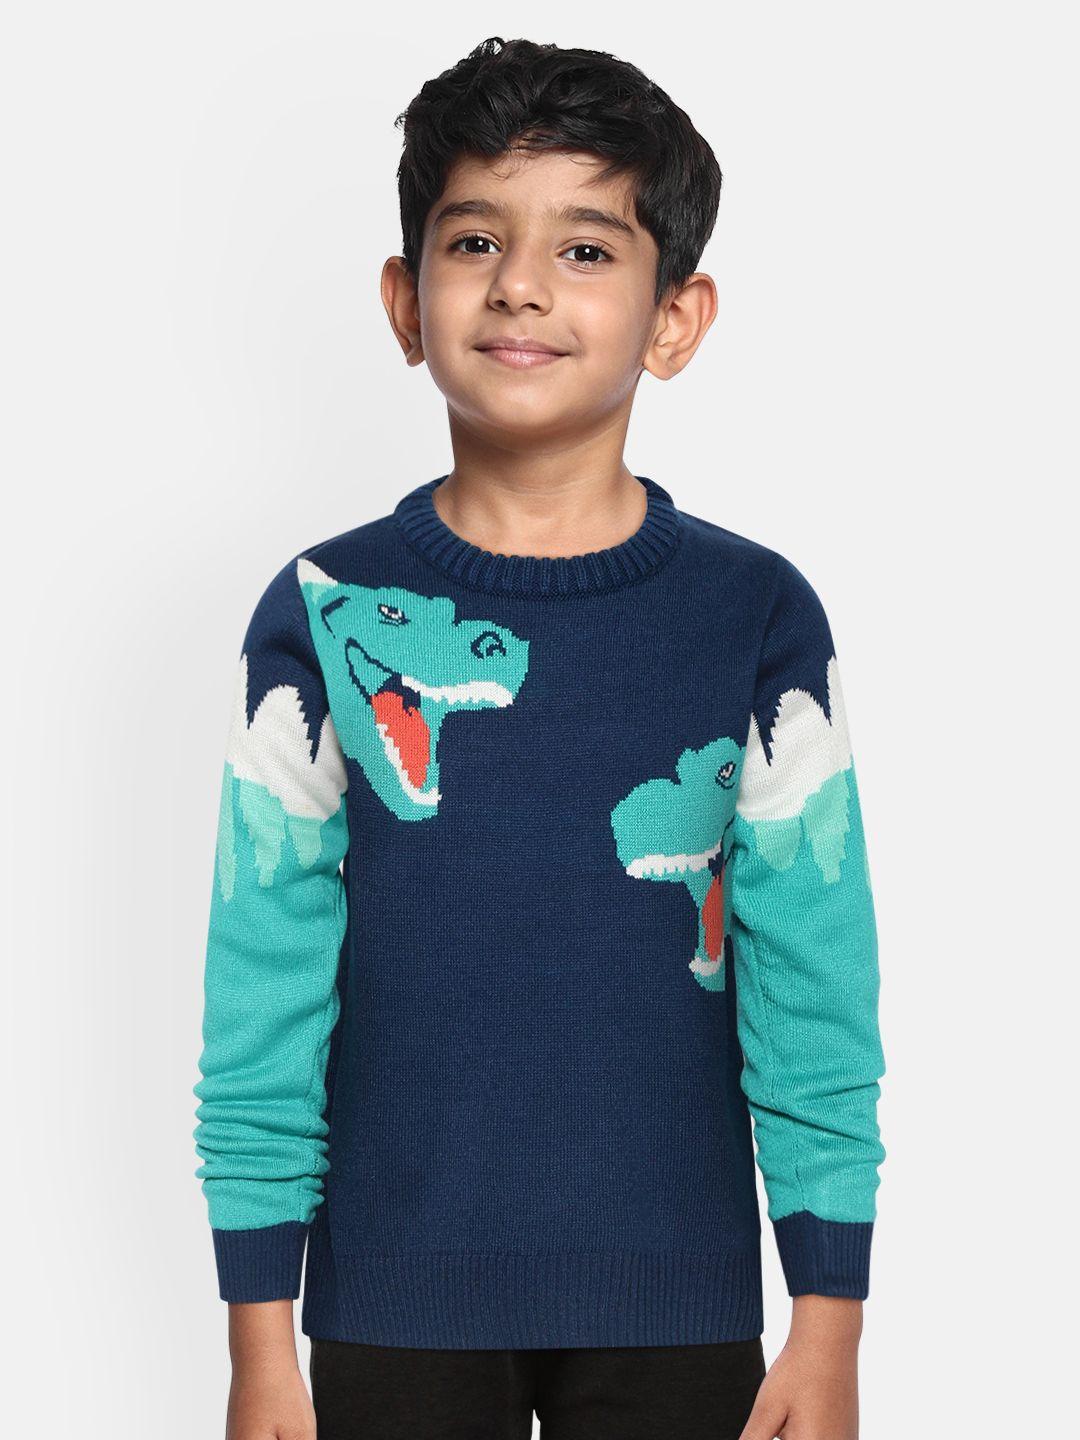 yk boys navy blue & green dinosaur patterned acrylic sweater